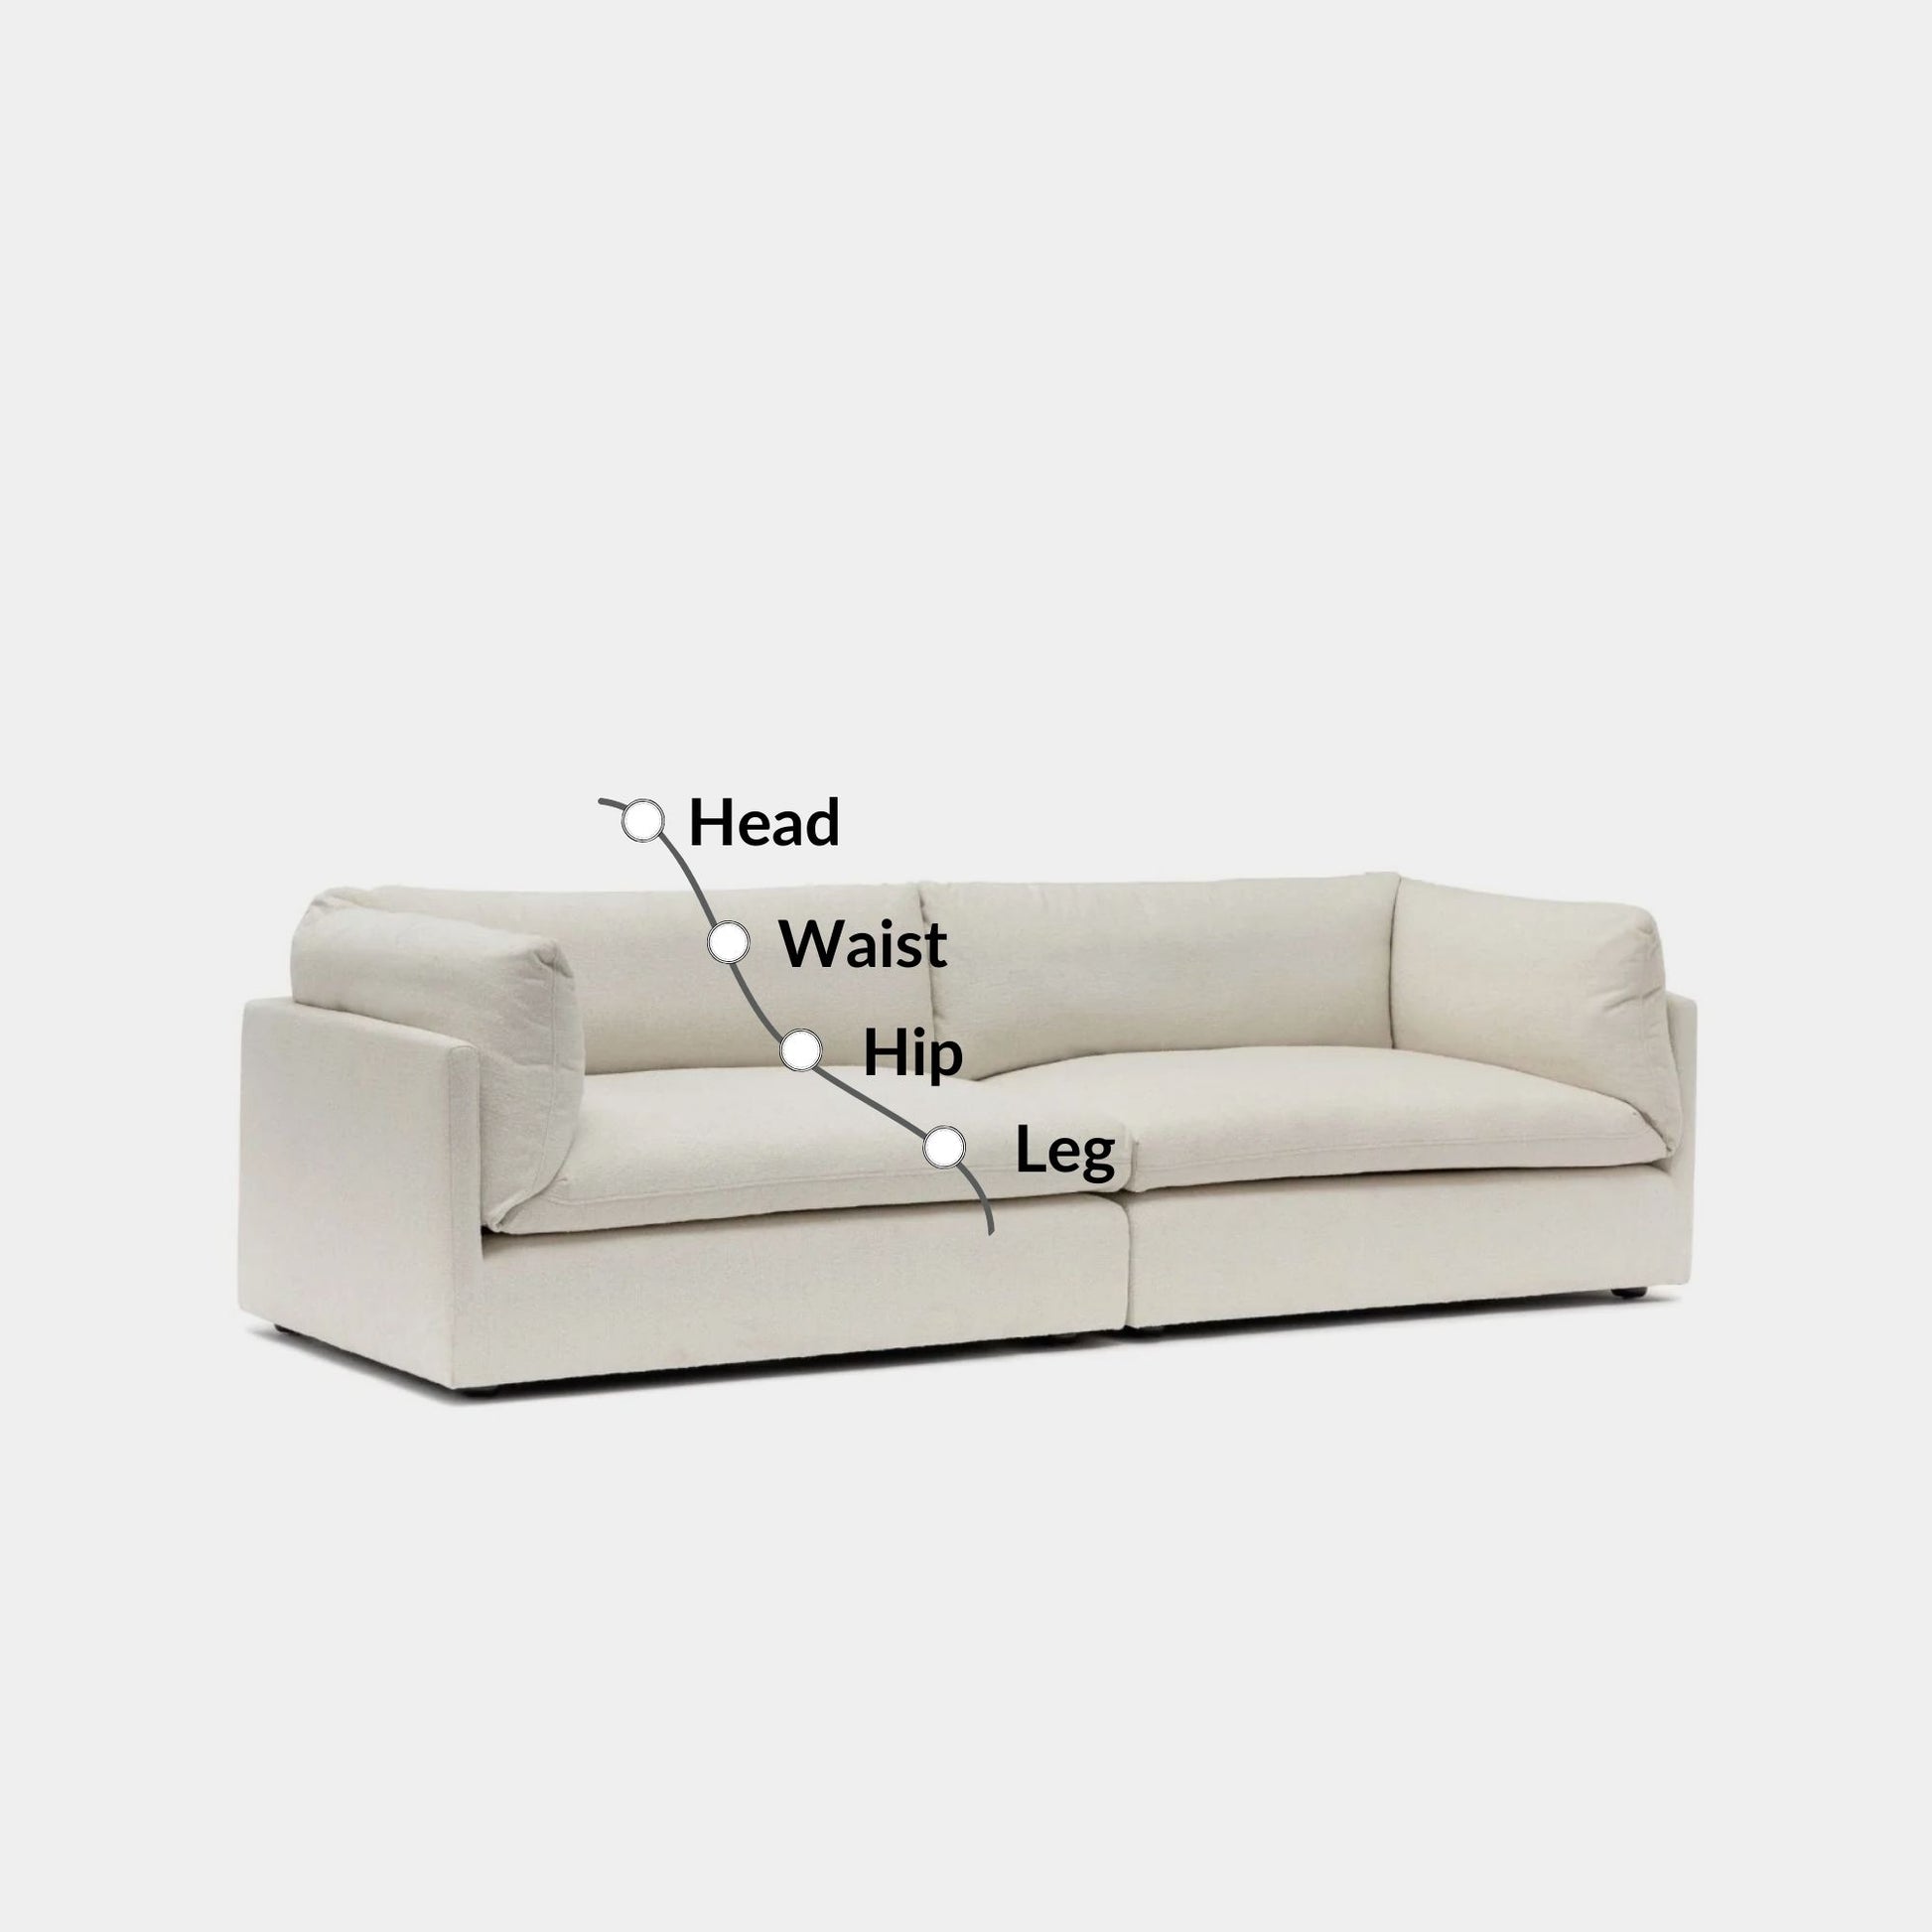 Clara fabric sofa white